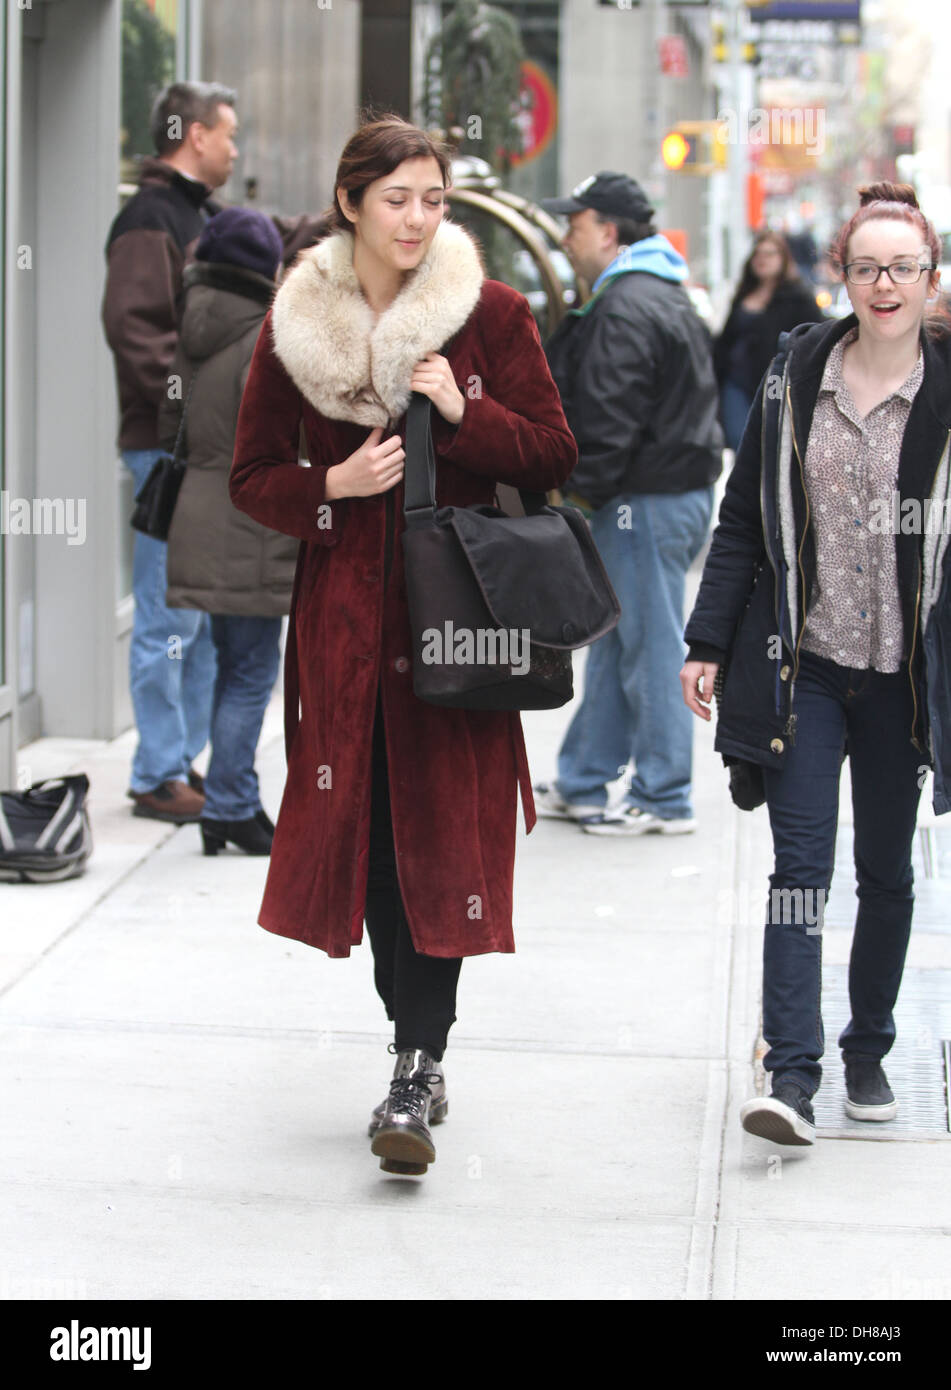 Canadian actress Katie Findlay leaving her SoHo hotel New York City, USA - 01.04.12 Stock Photo